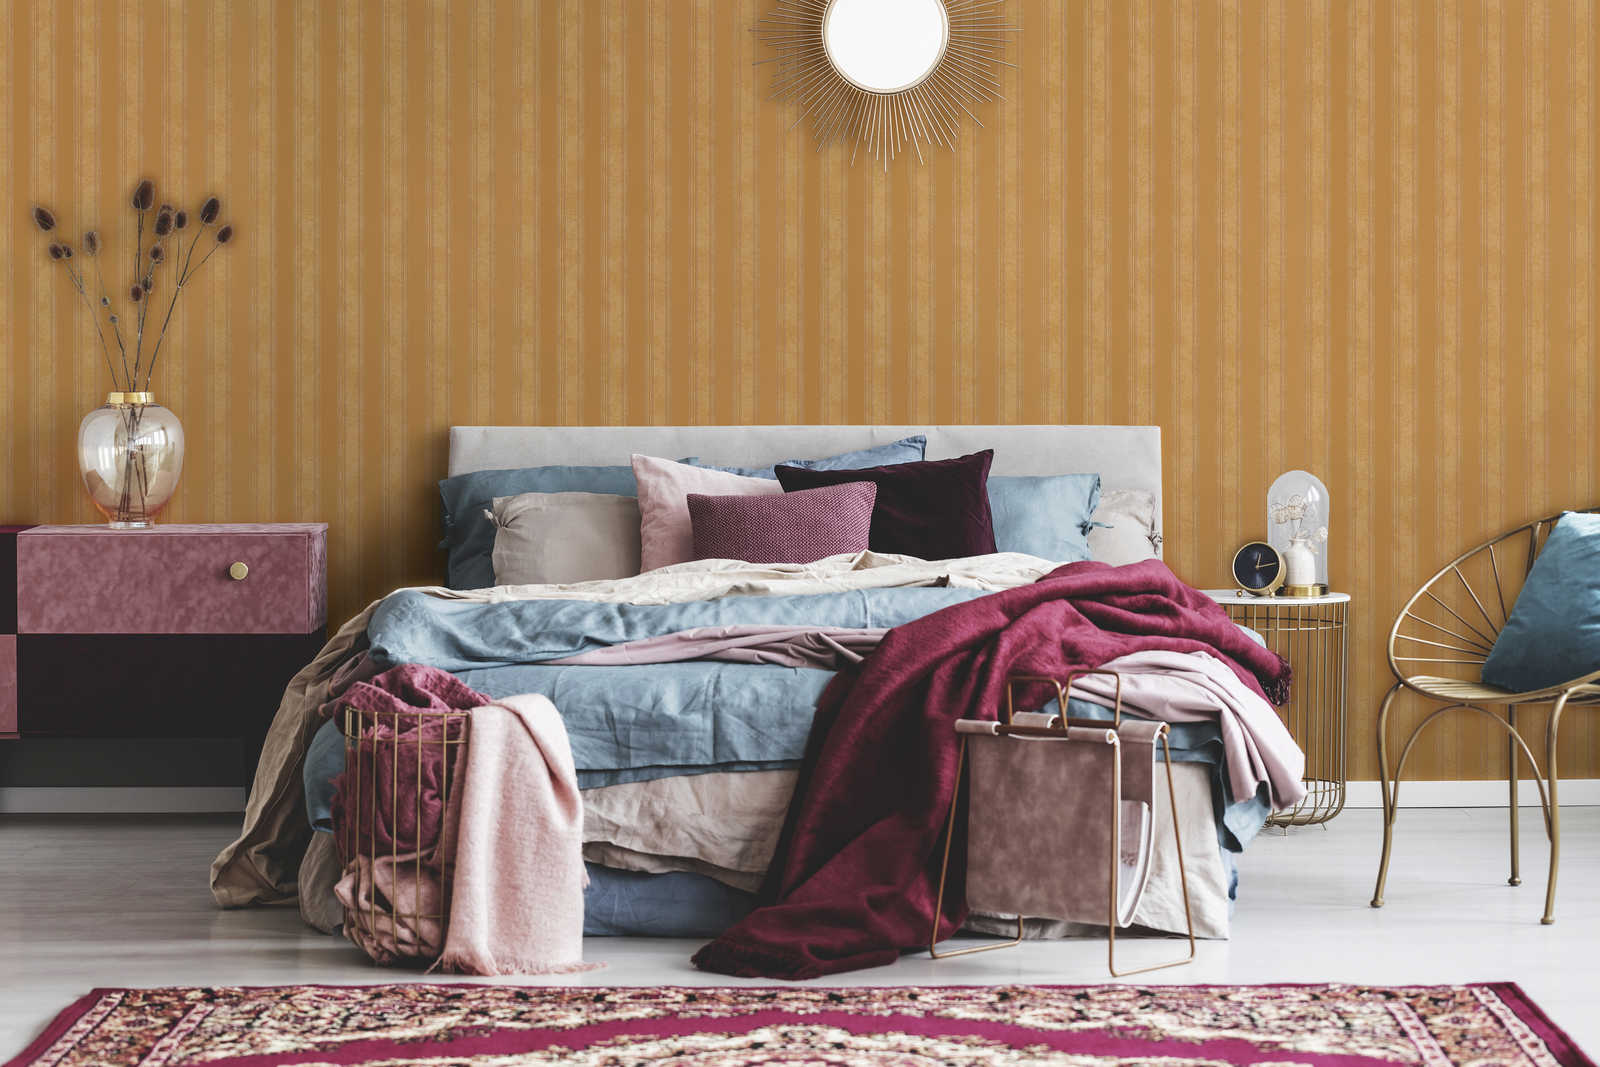             Non-woven wallpaper VERSACE golden stripes & plaster texture - metallic
        